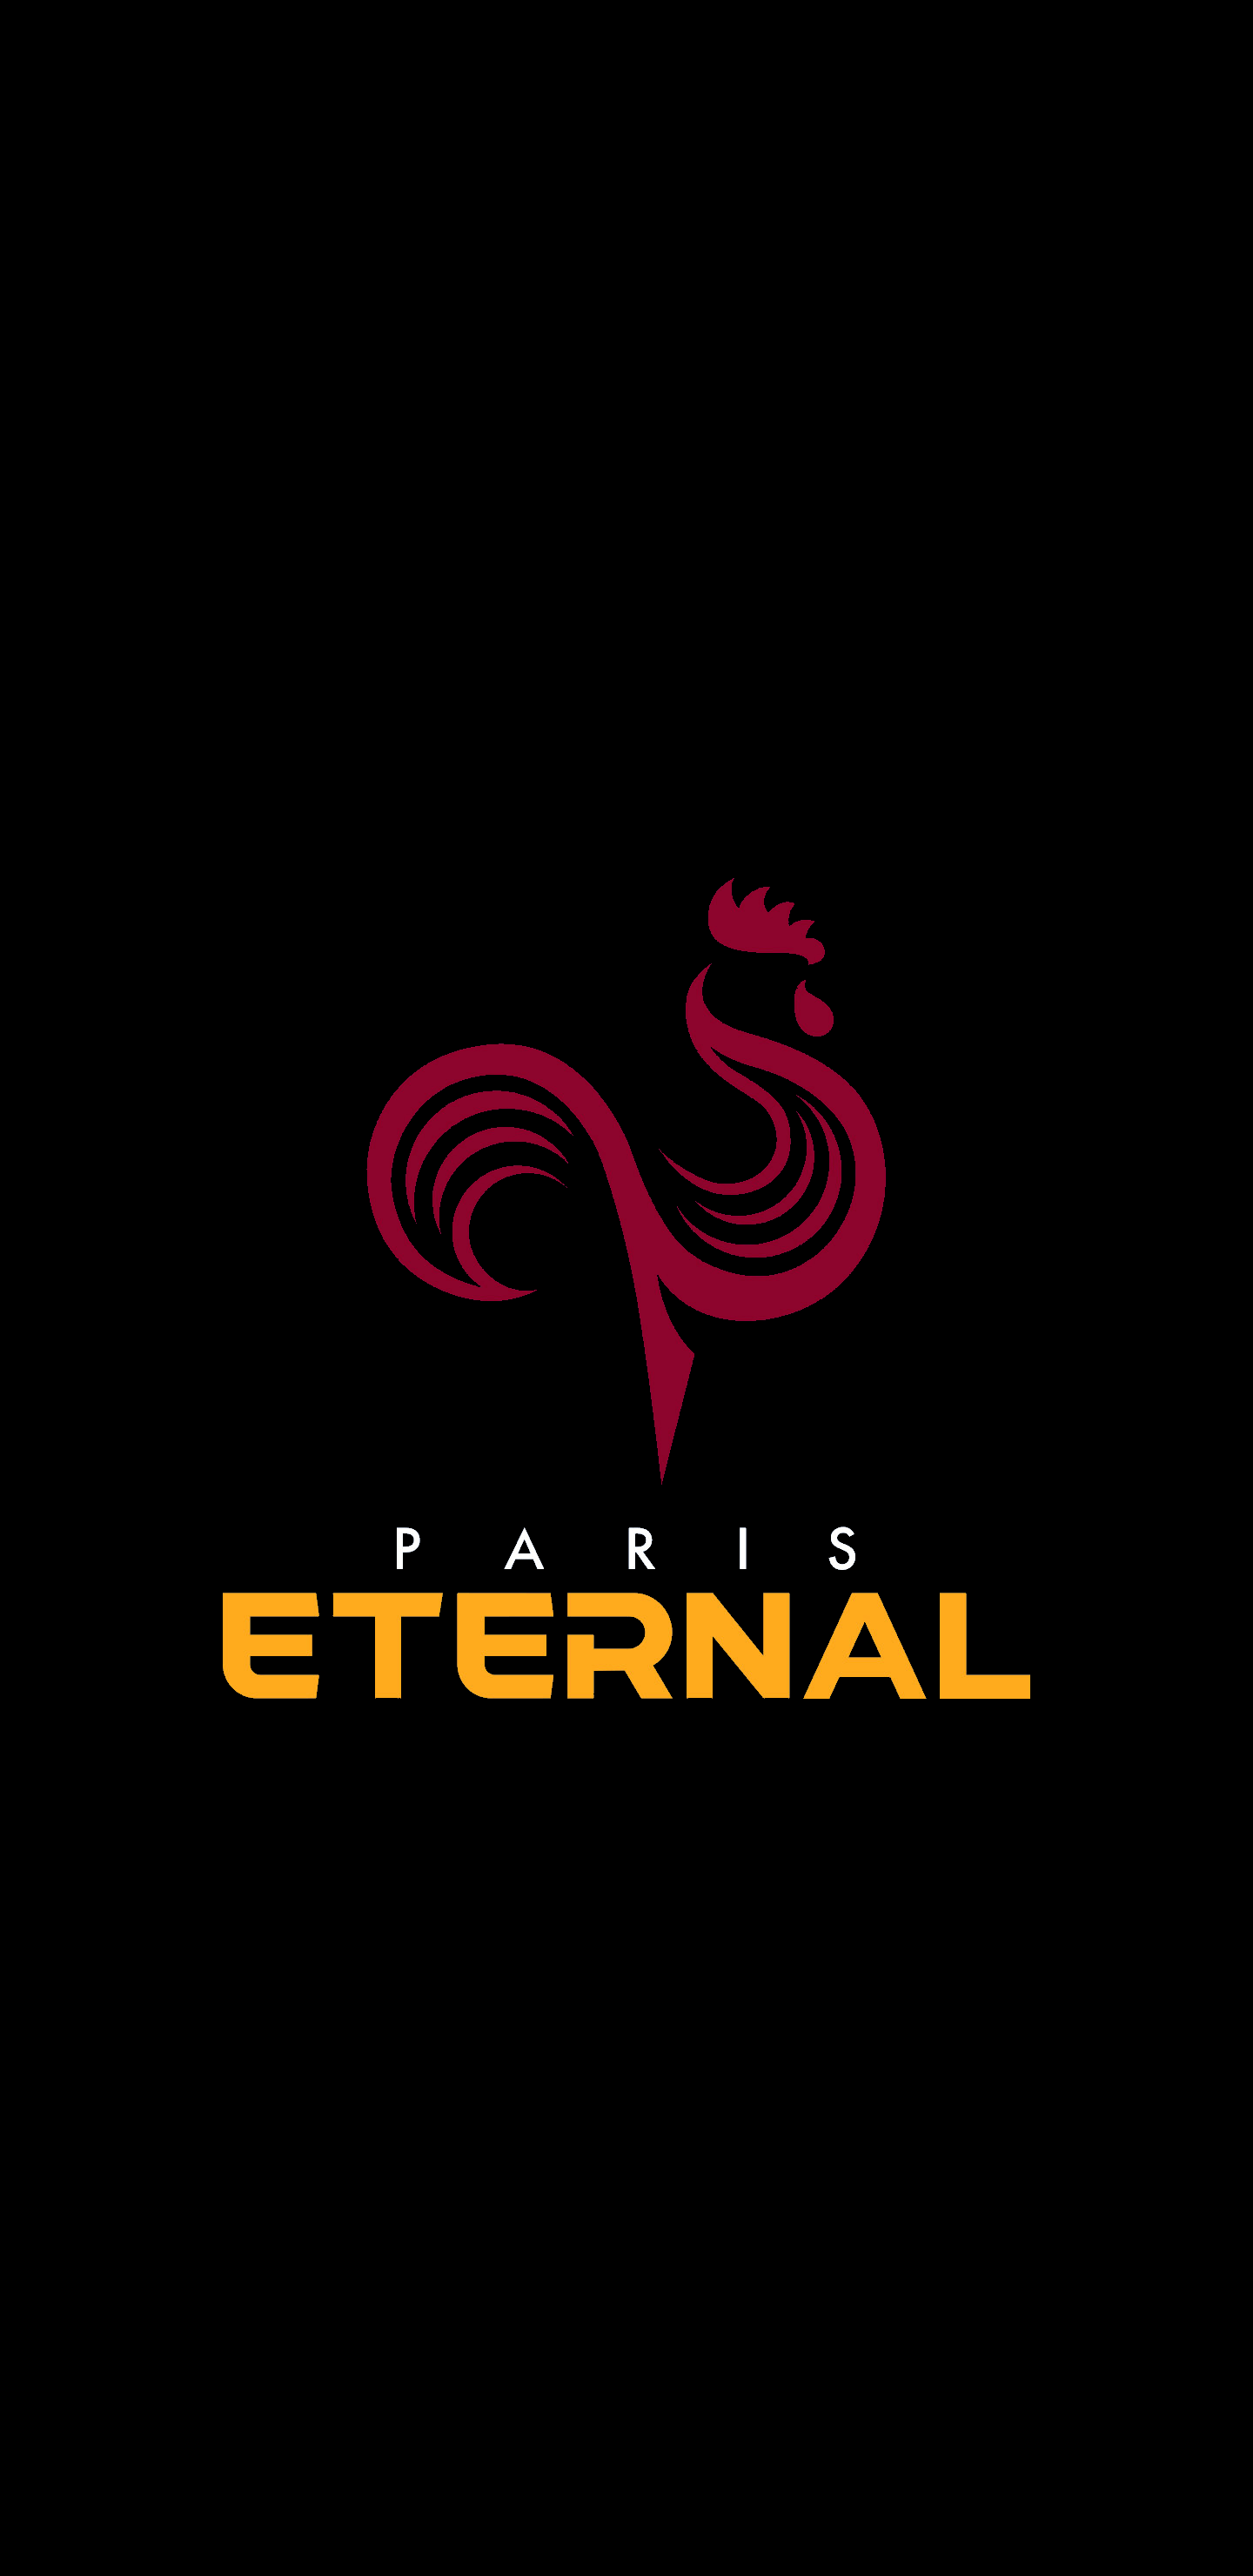 Eternal Logo - Paris Eternal Logo League (96.43%) 1440x2960